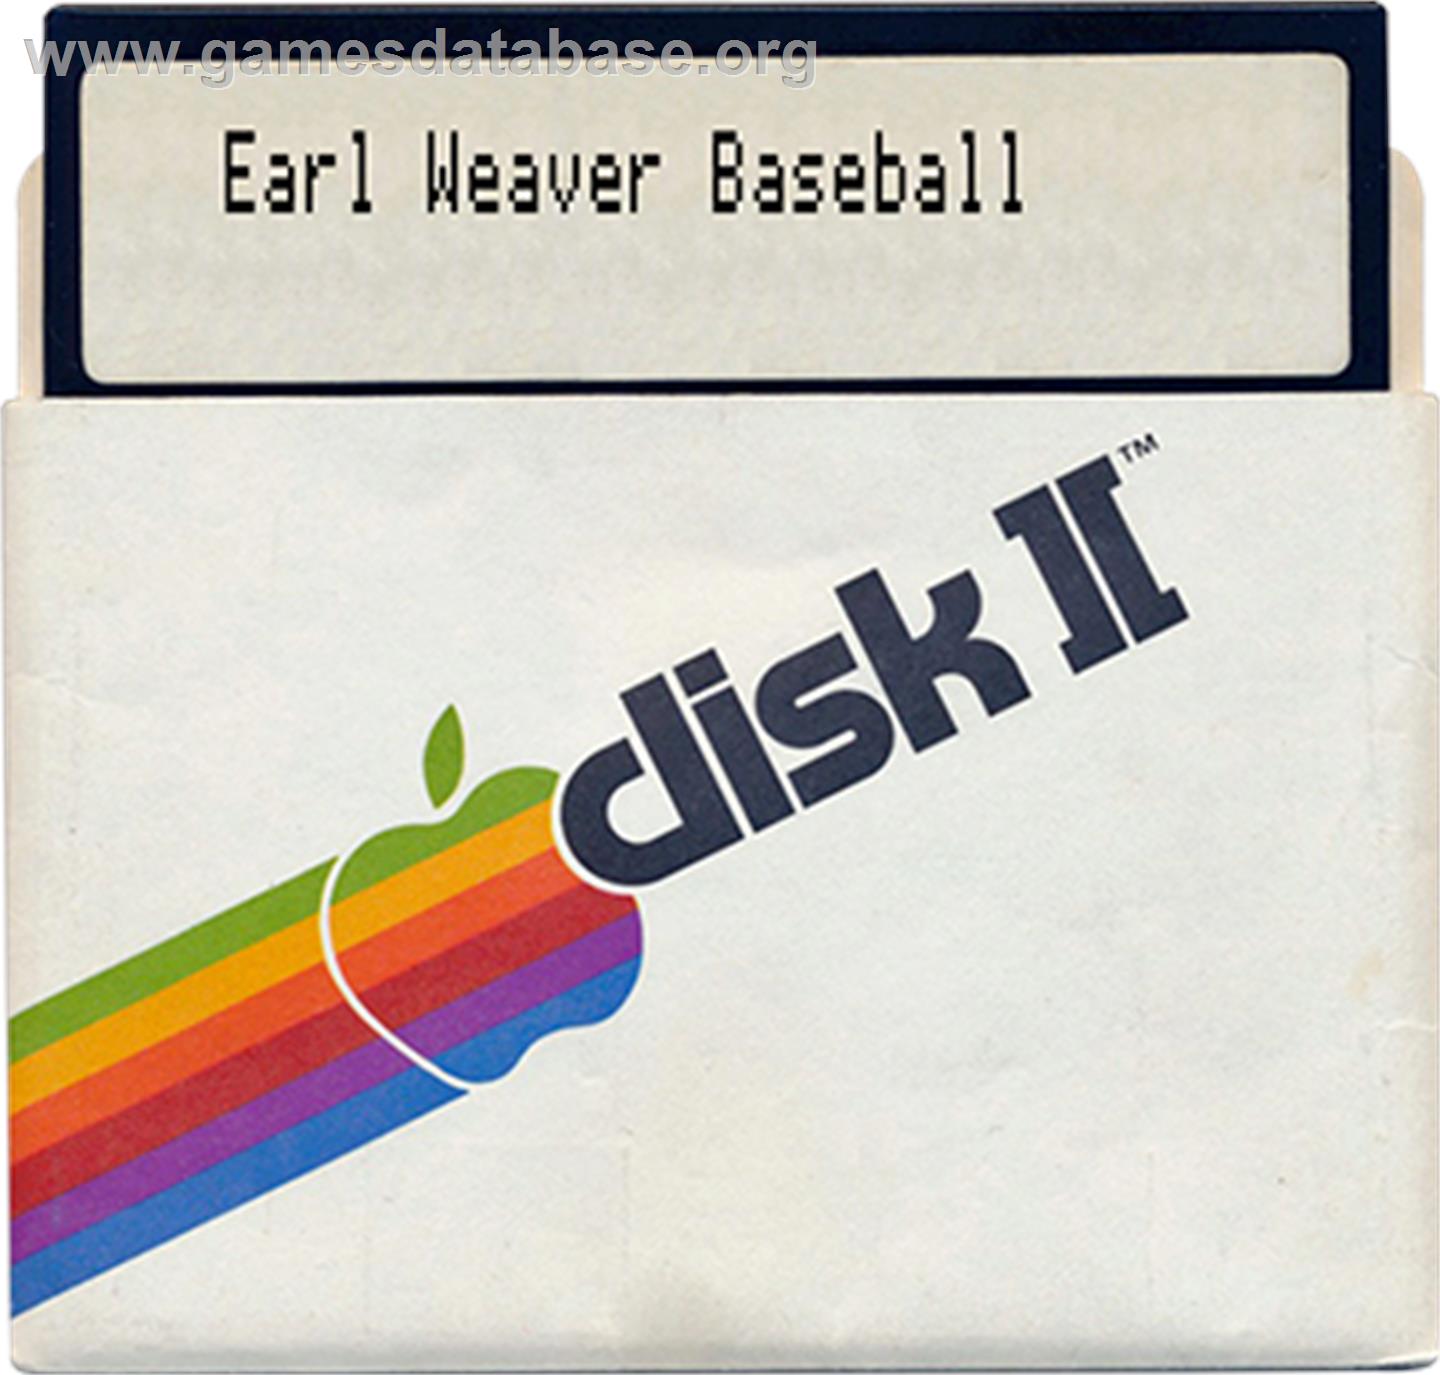 Earl Weaver Baseball - Apple II - Artwork - Disc